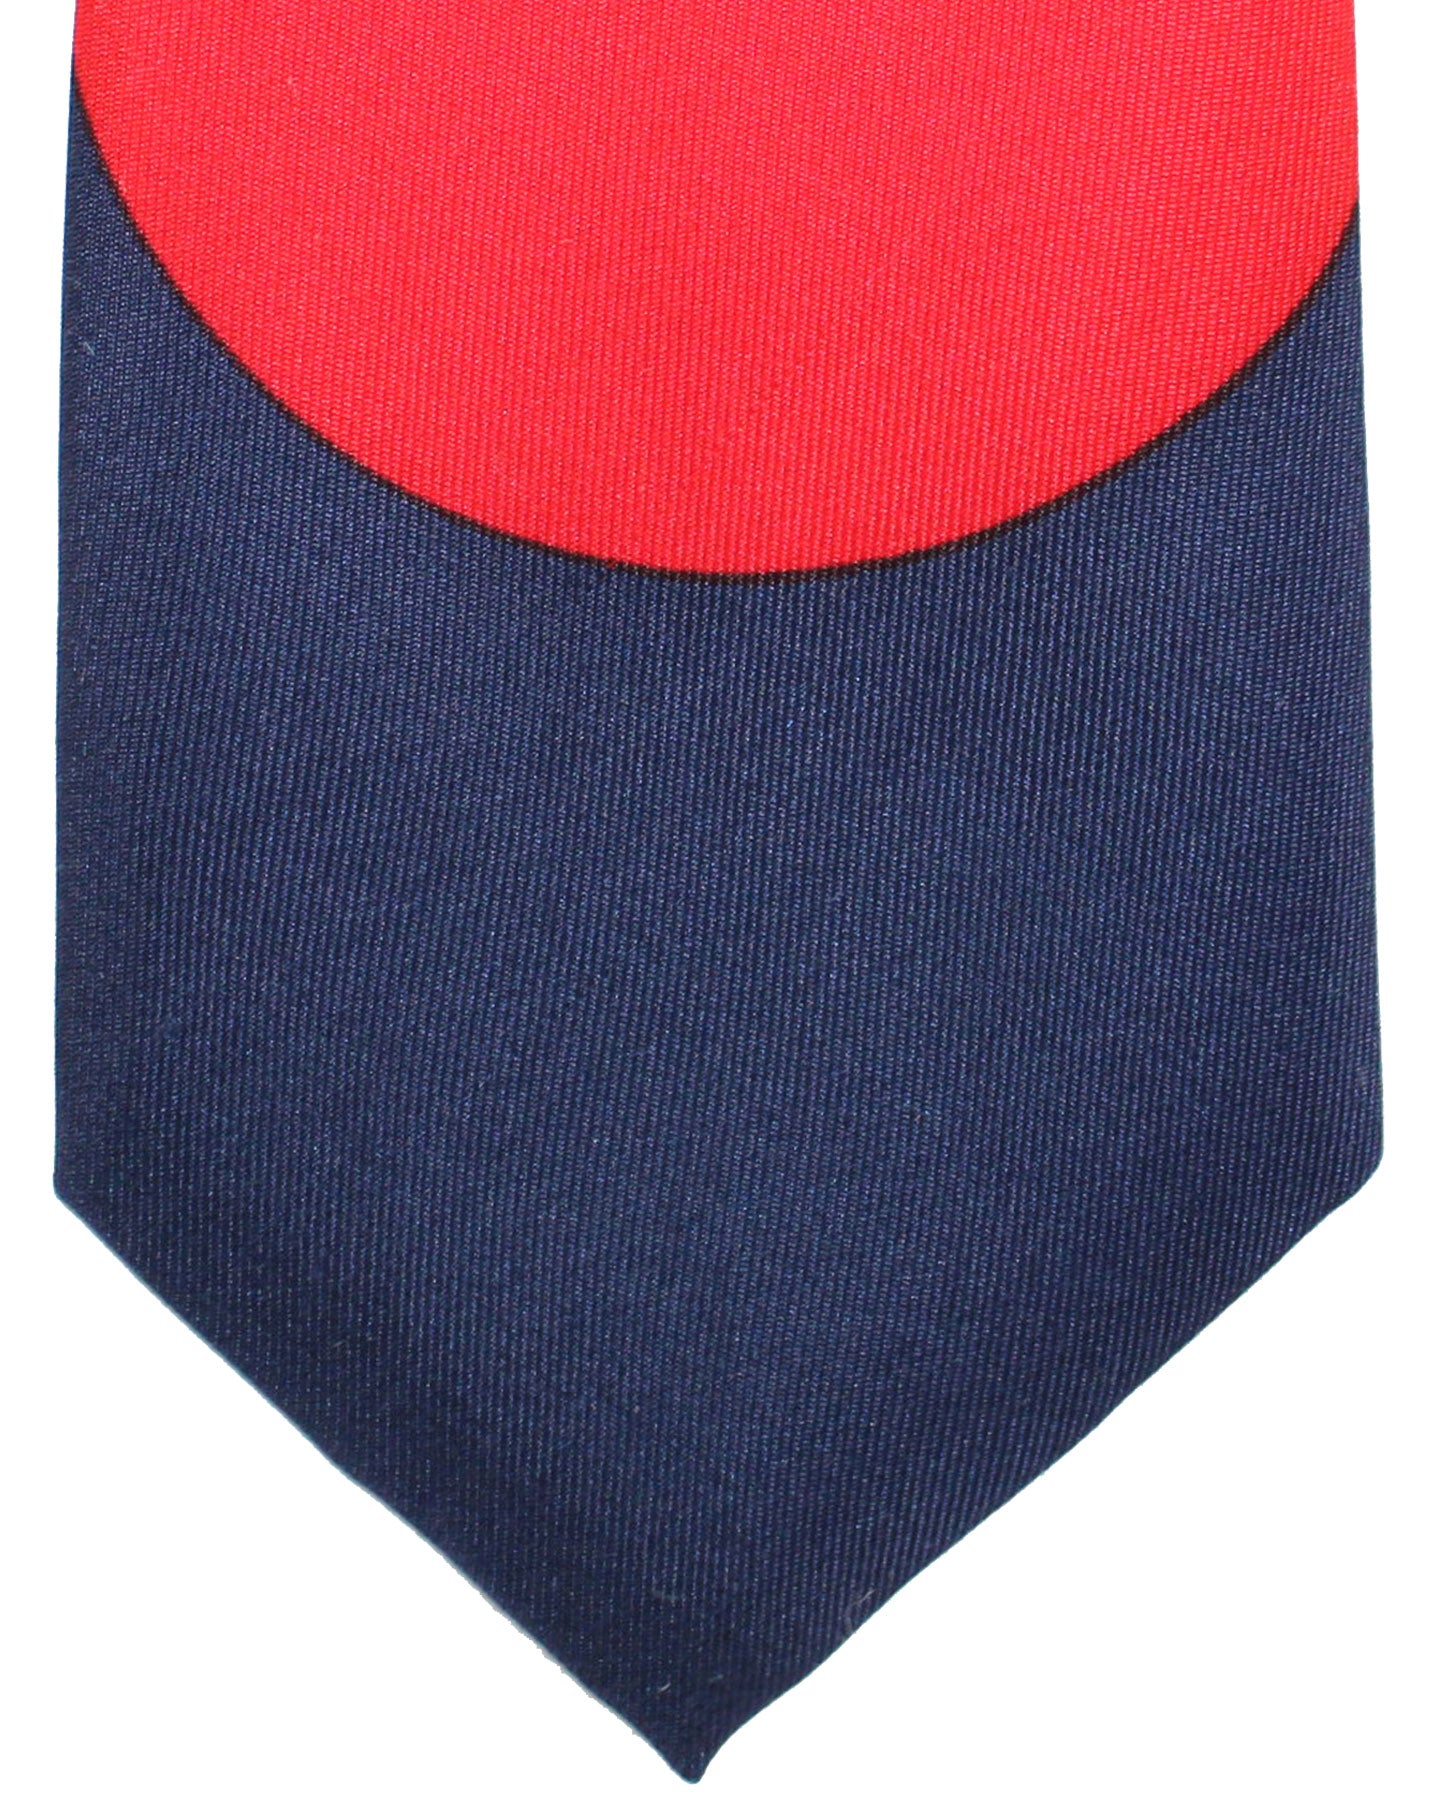 Gene Meyer Tie Dark Navy Red Polka Dot Design - Hand Made in Italy